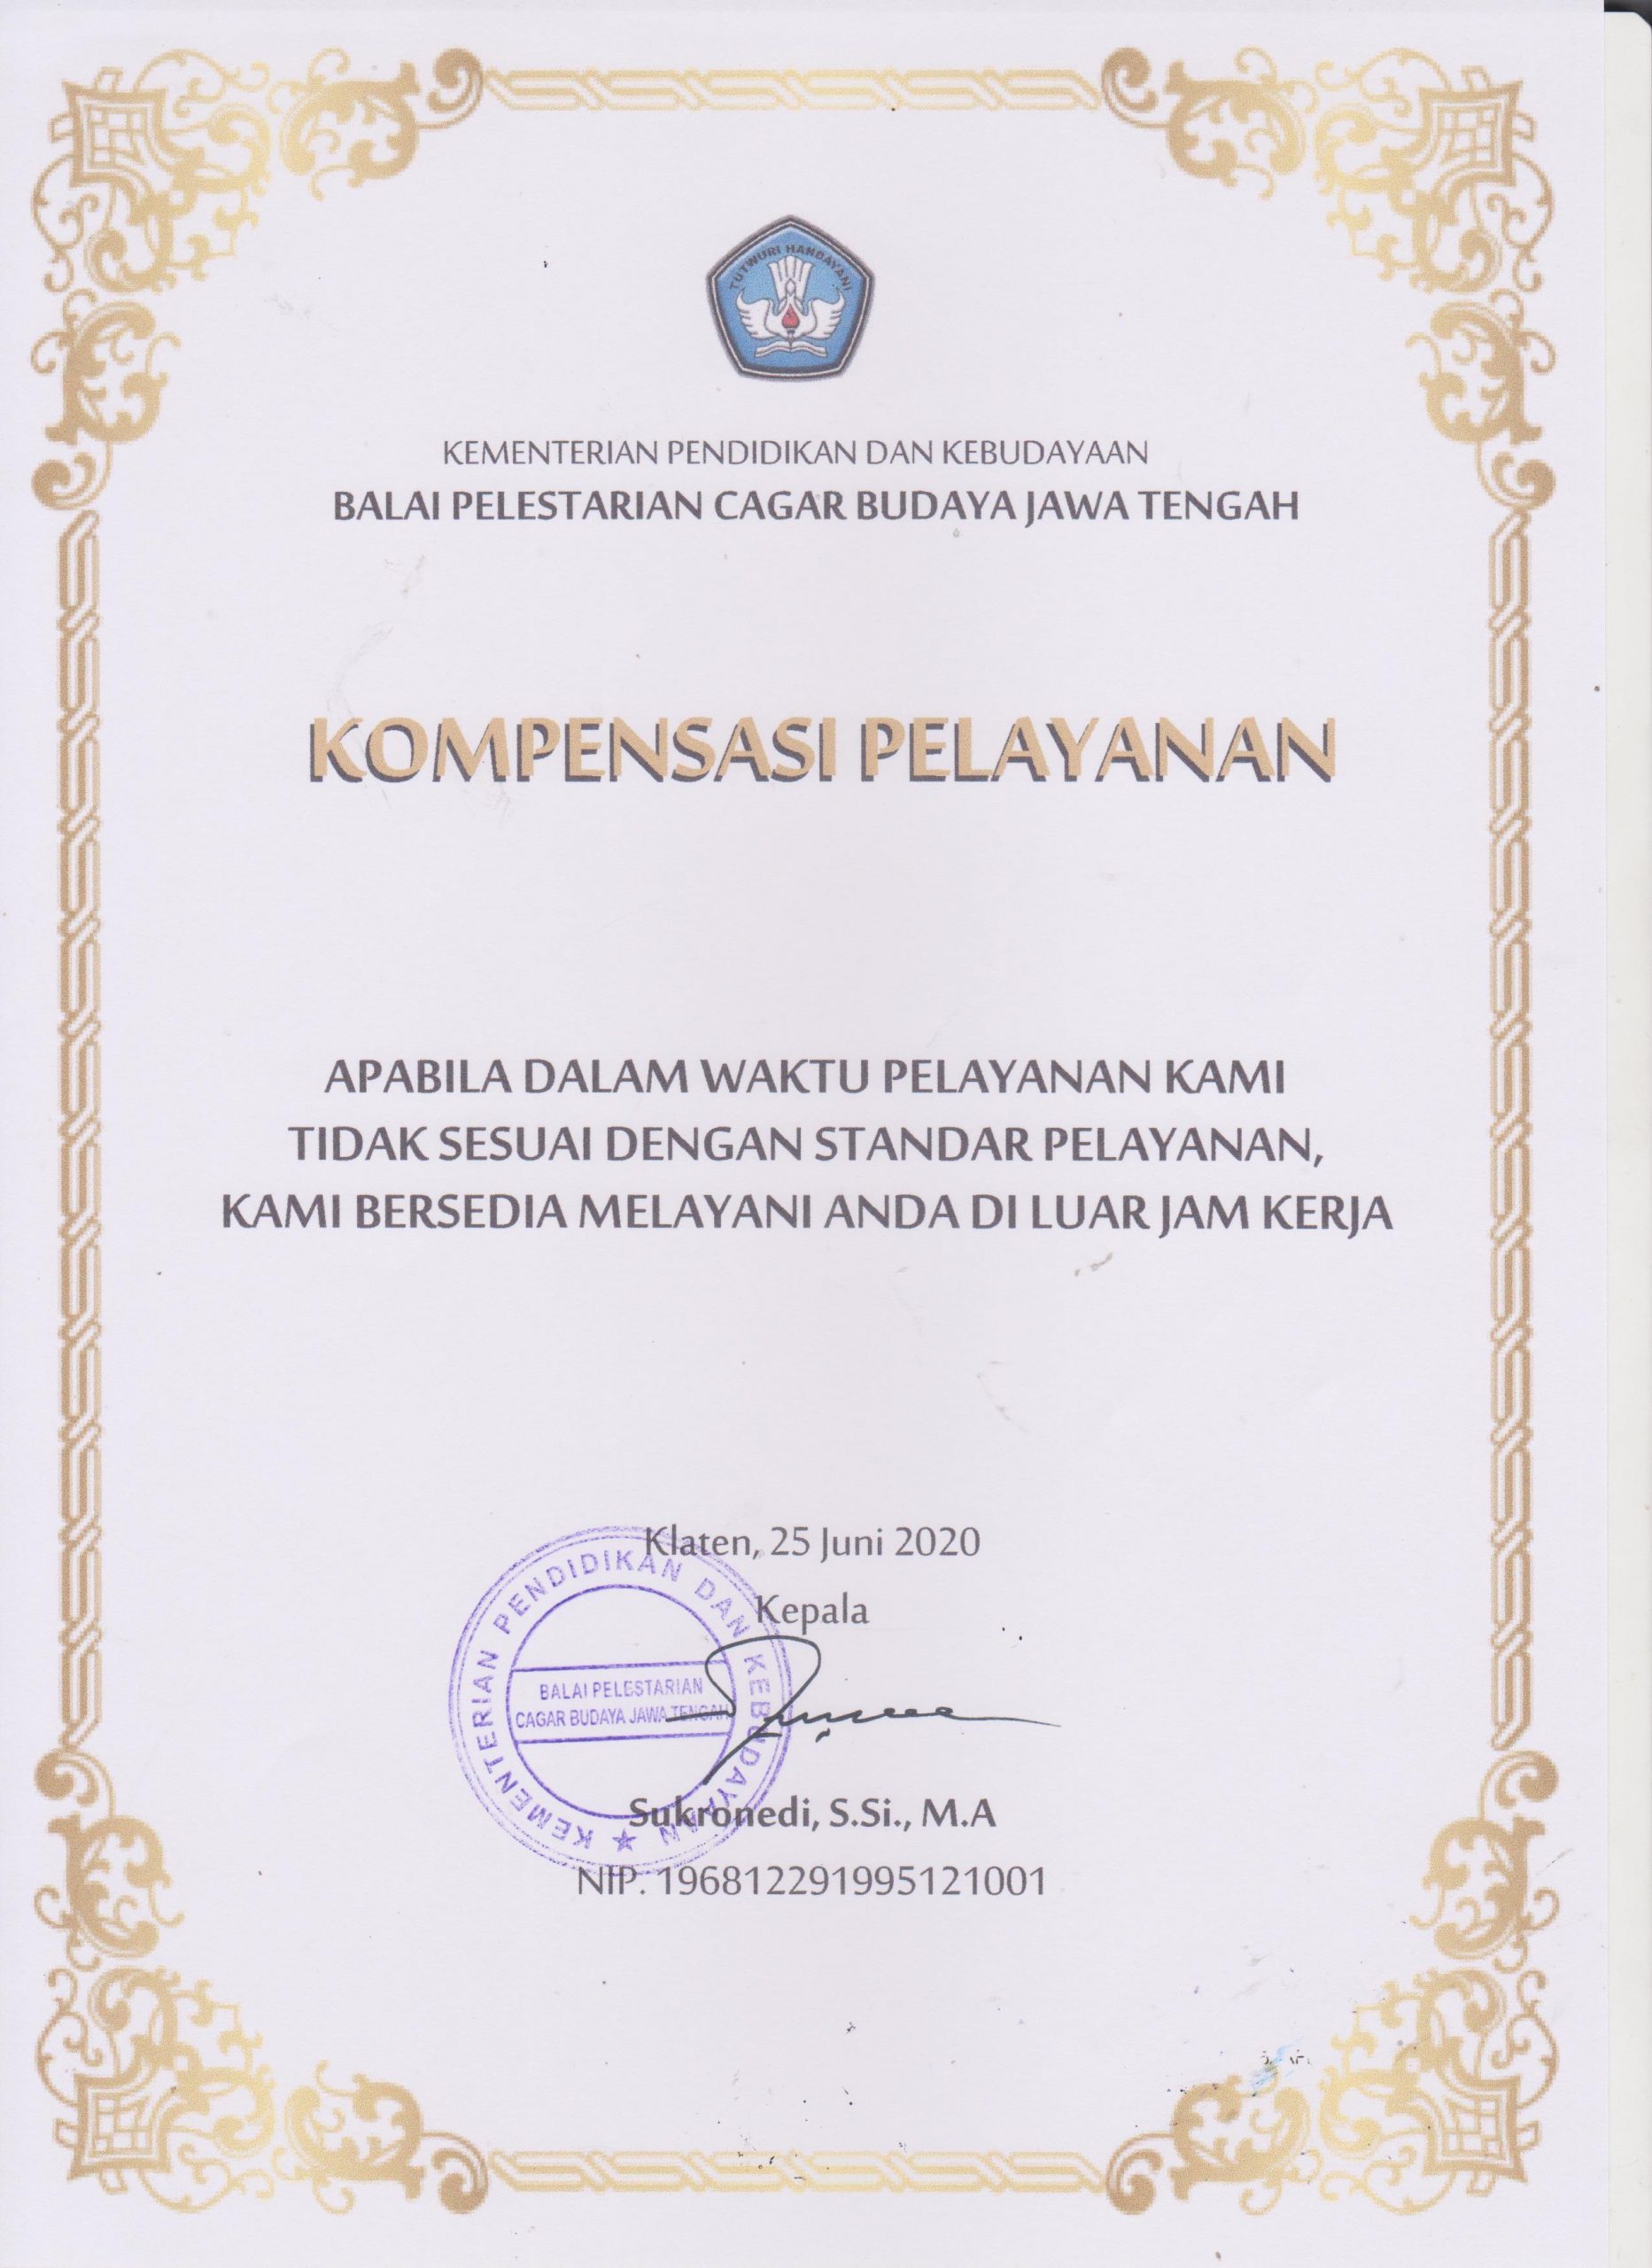 You are currently viewing Kompensasi Pelayanan Balai Pelestarian Cagar Budaya Jawa Tengah